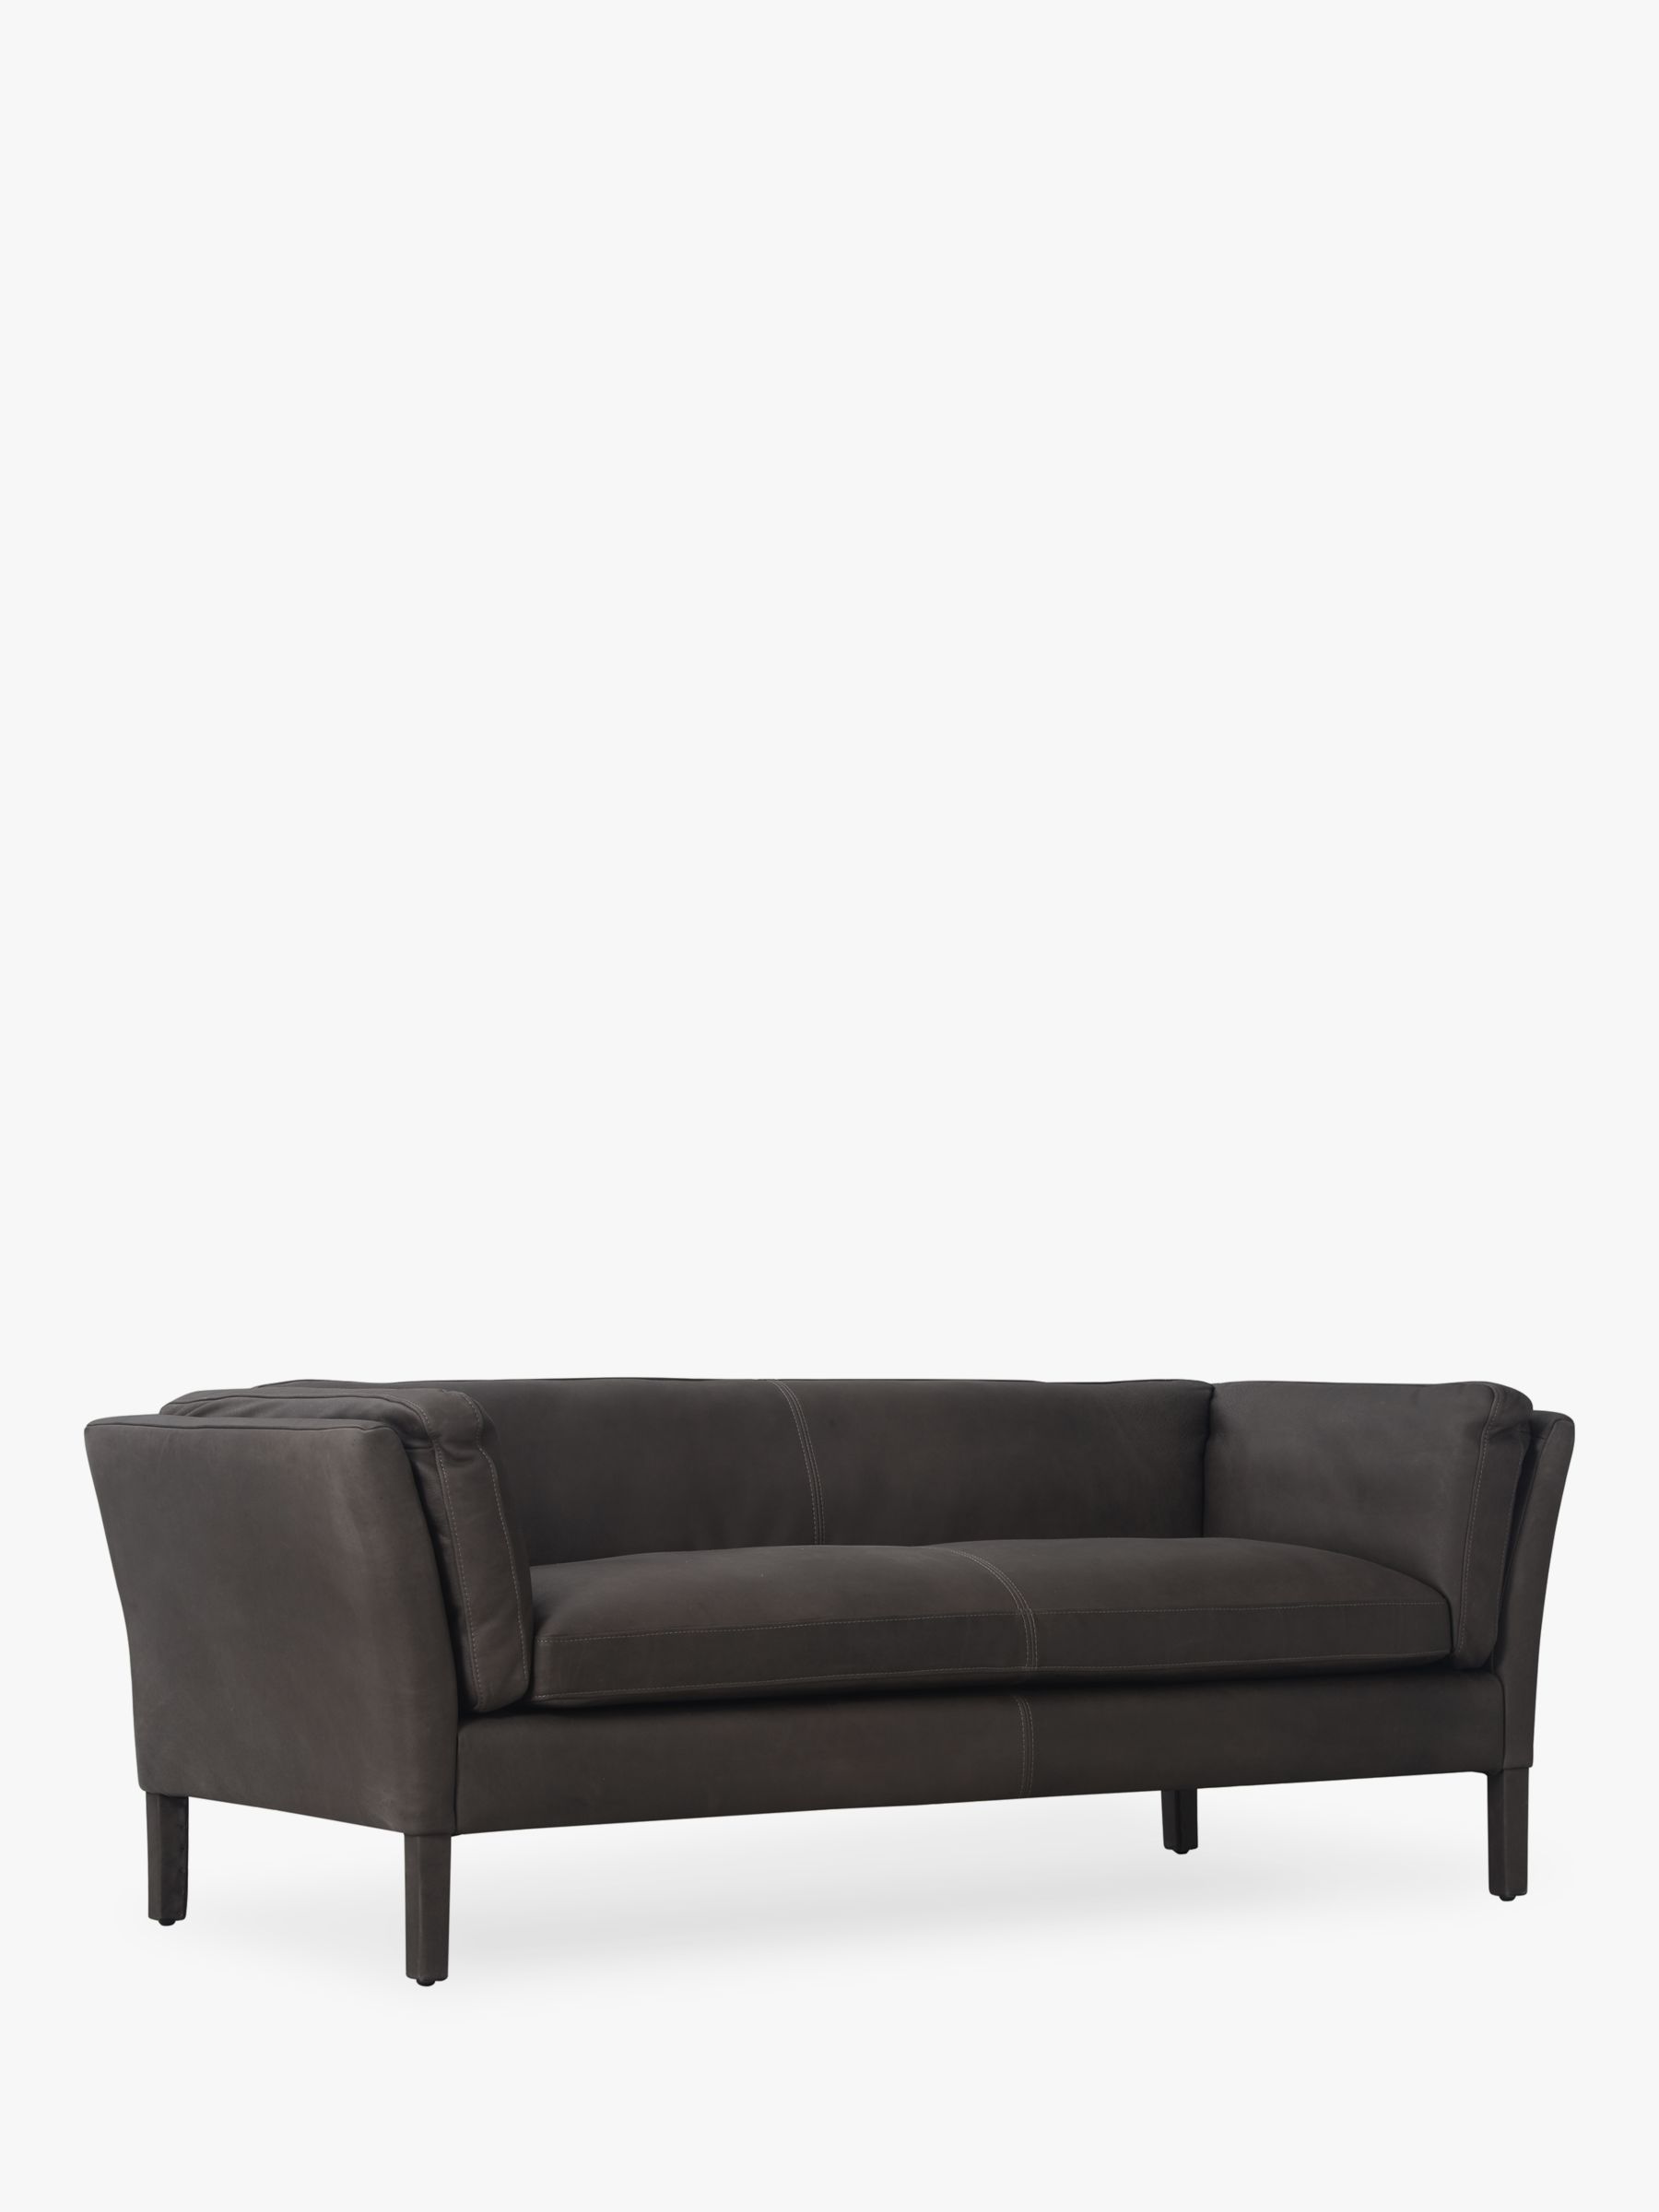 Halo Groucho Medium 2 Seater Leather Sofa, Dark Leg